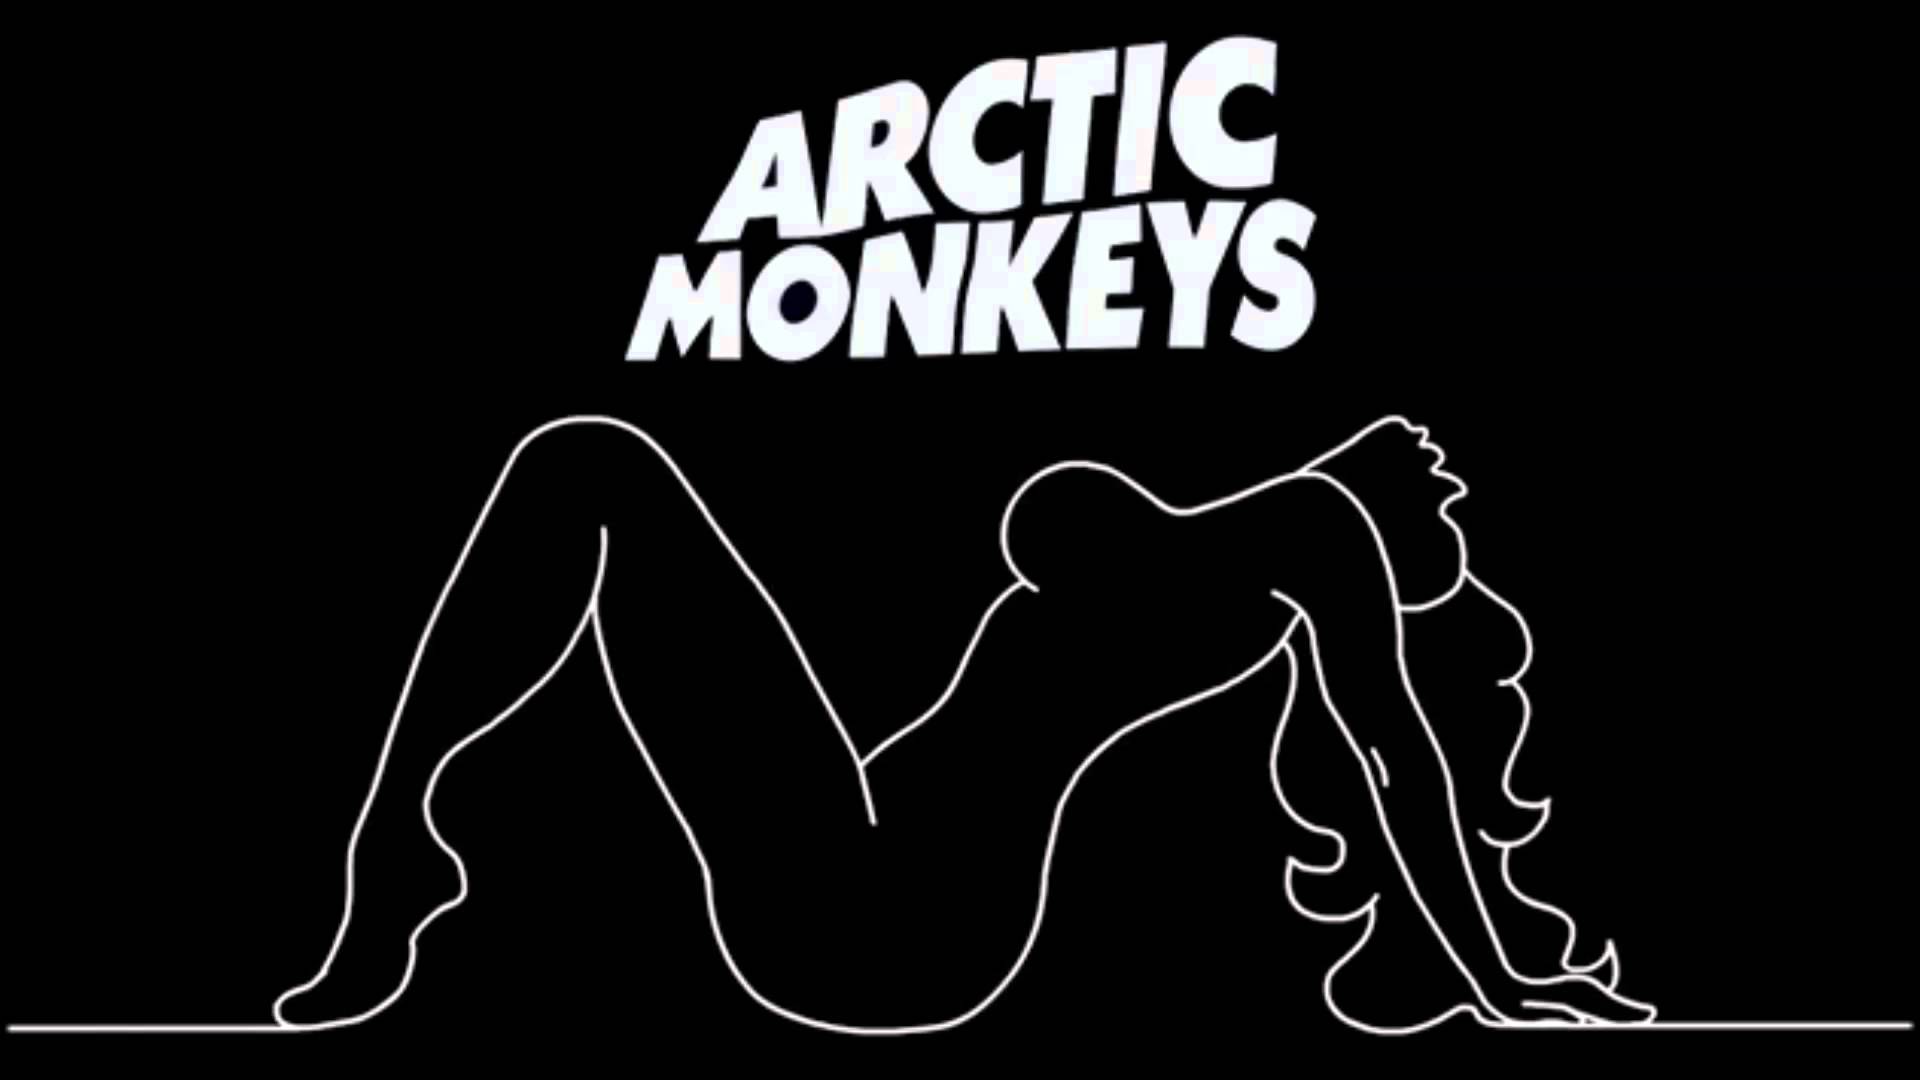 Arctic Monkeys Iphone 5 Clipart.